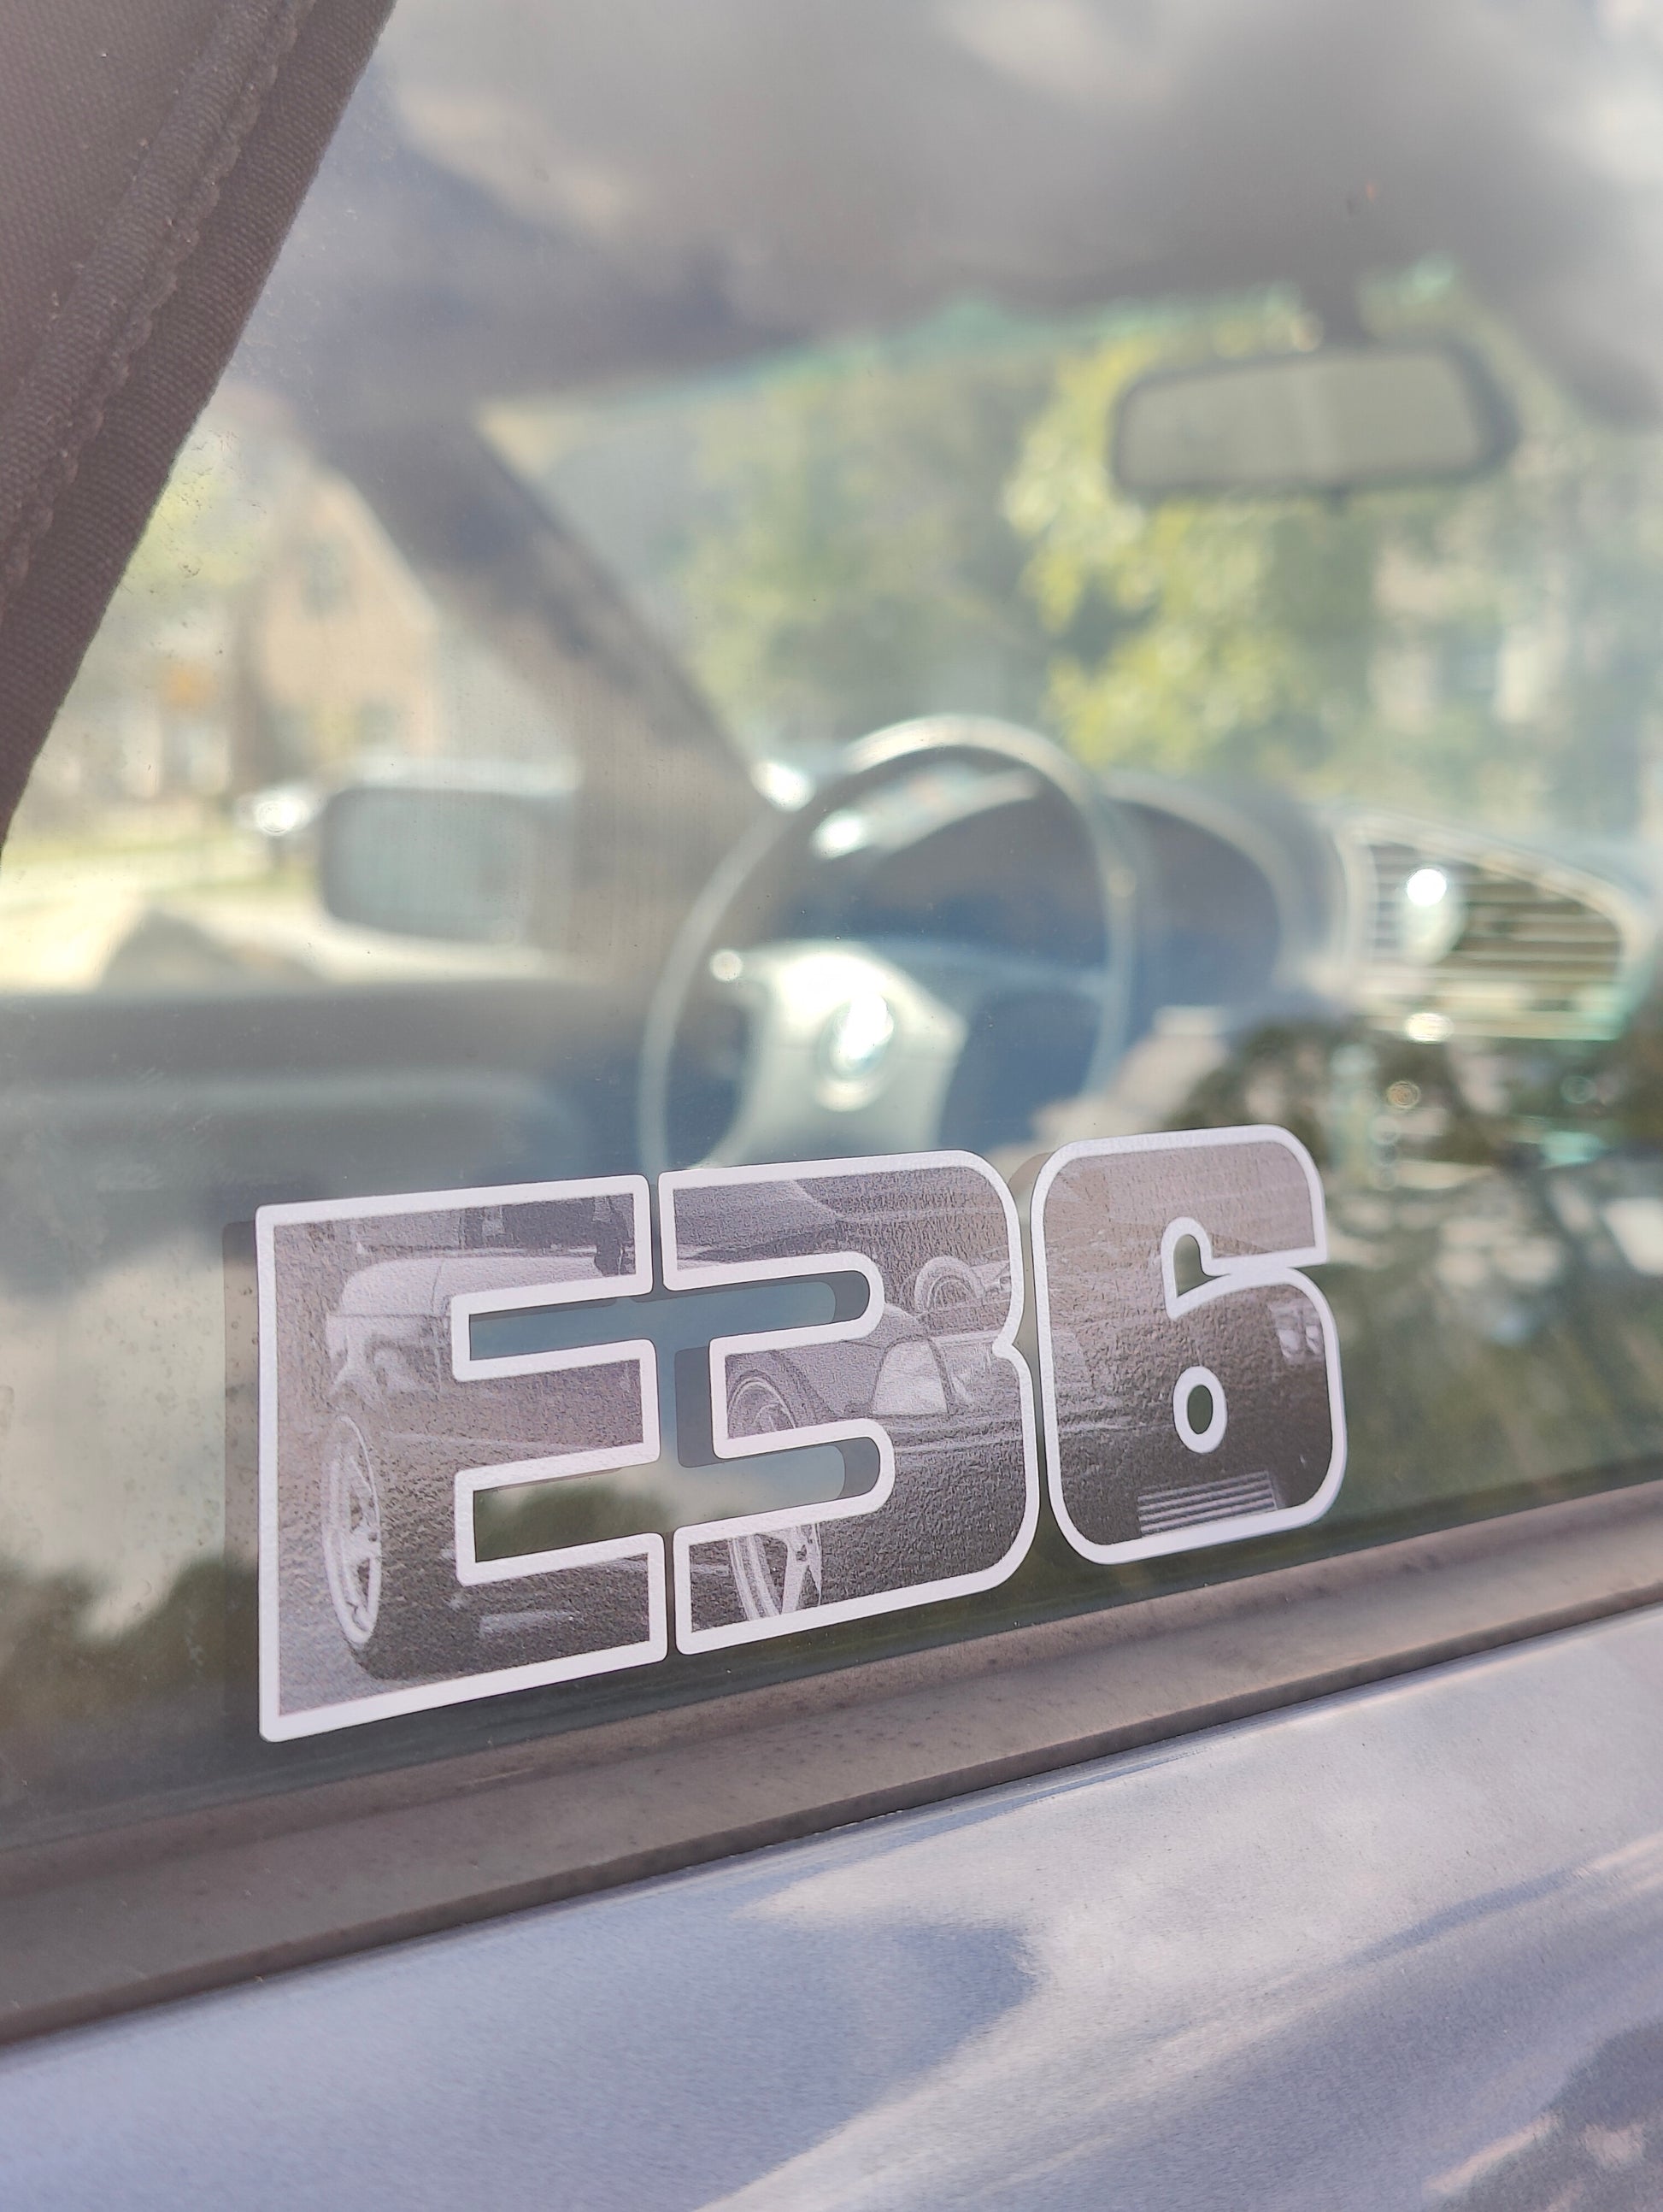 E36 window decal